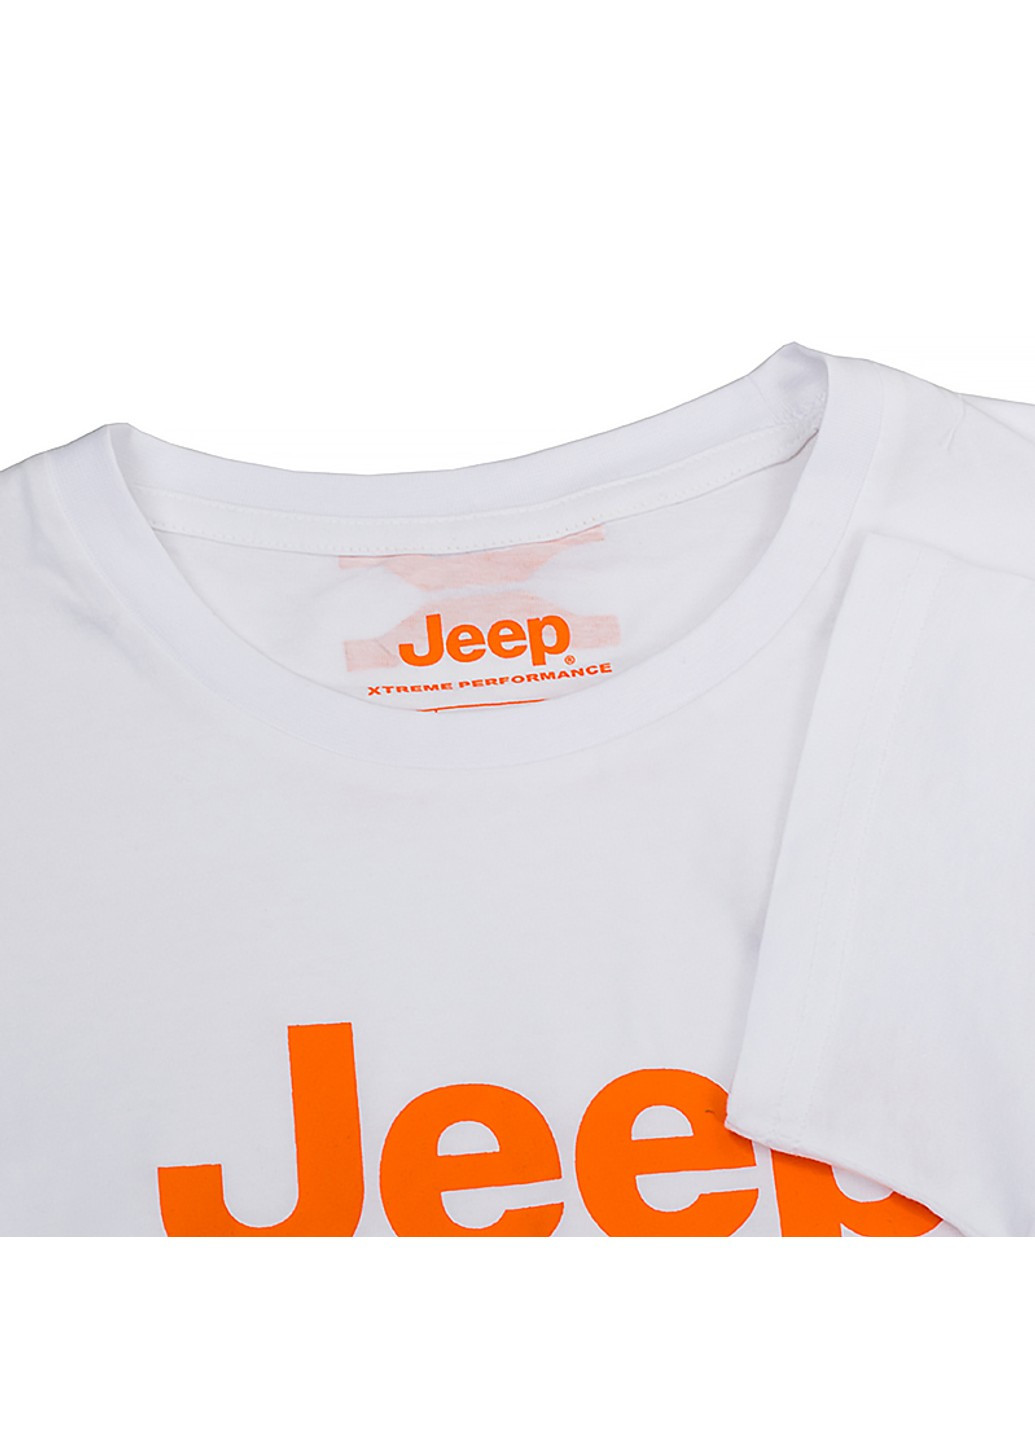 Белая футболка t-shirt xtreme performance print jx22a Jeep